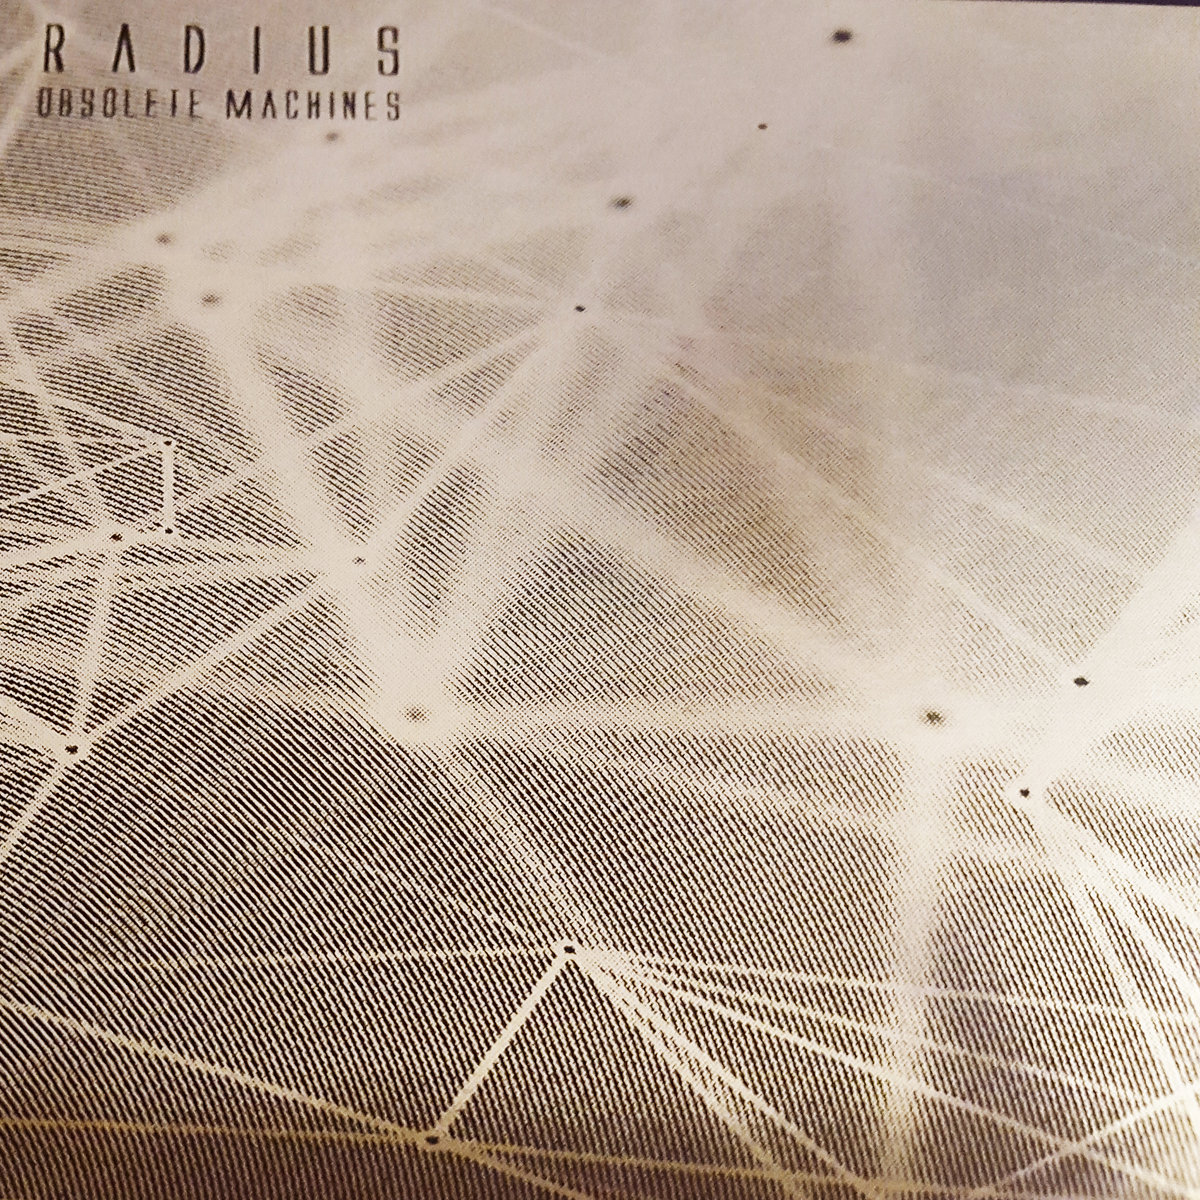 Radius – Obsolete Machines [w/cv313 reshapes]